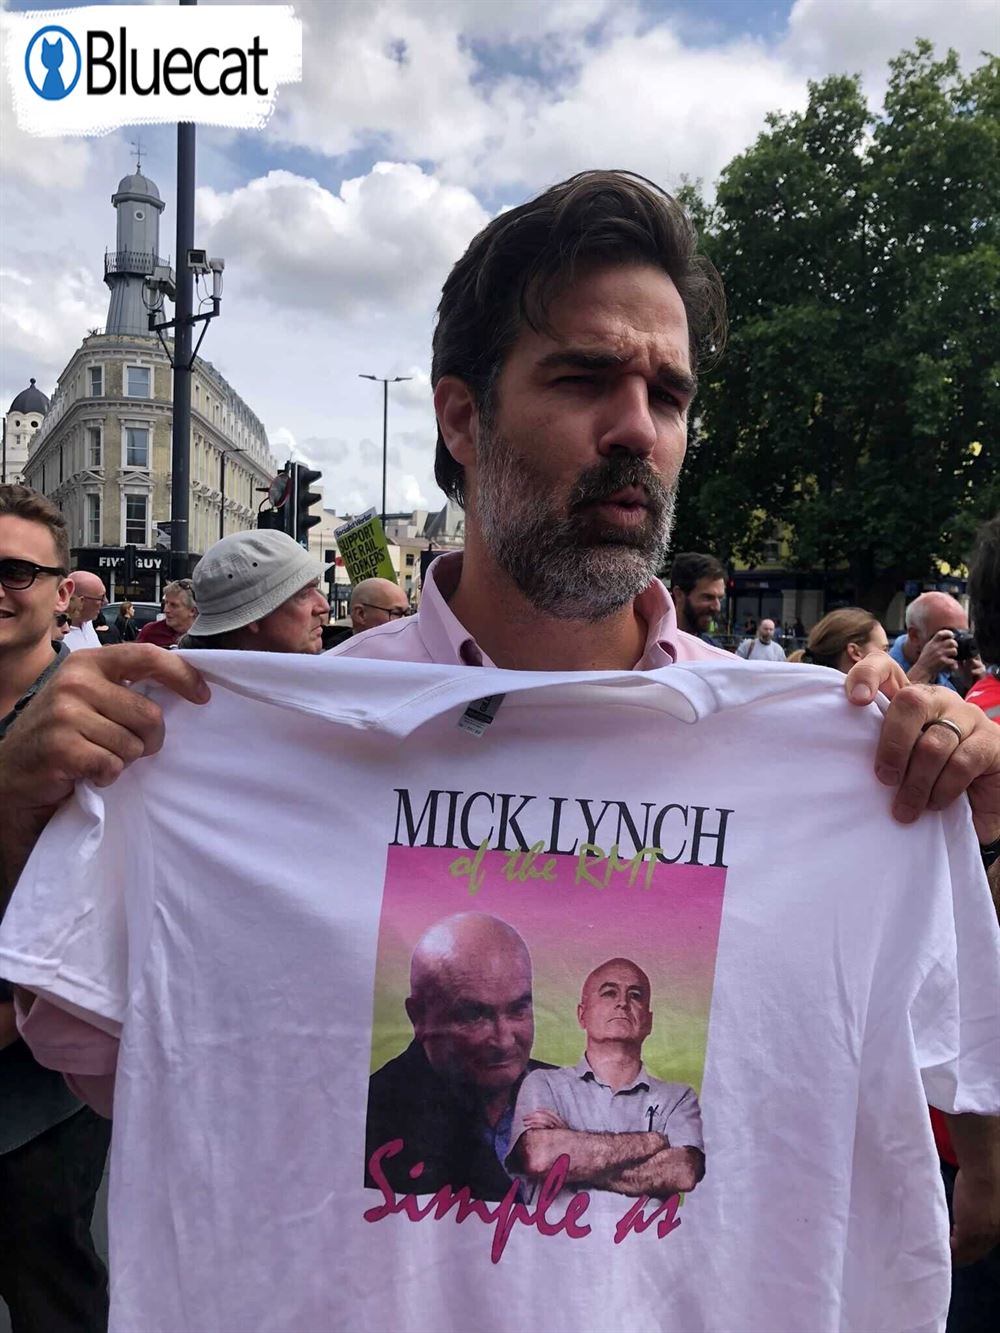 Mick Lynch Simple As T-shirt